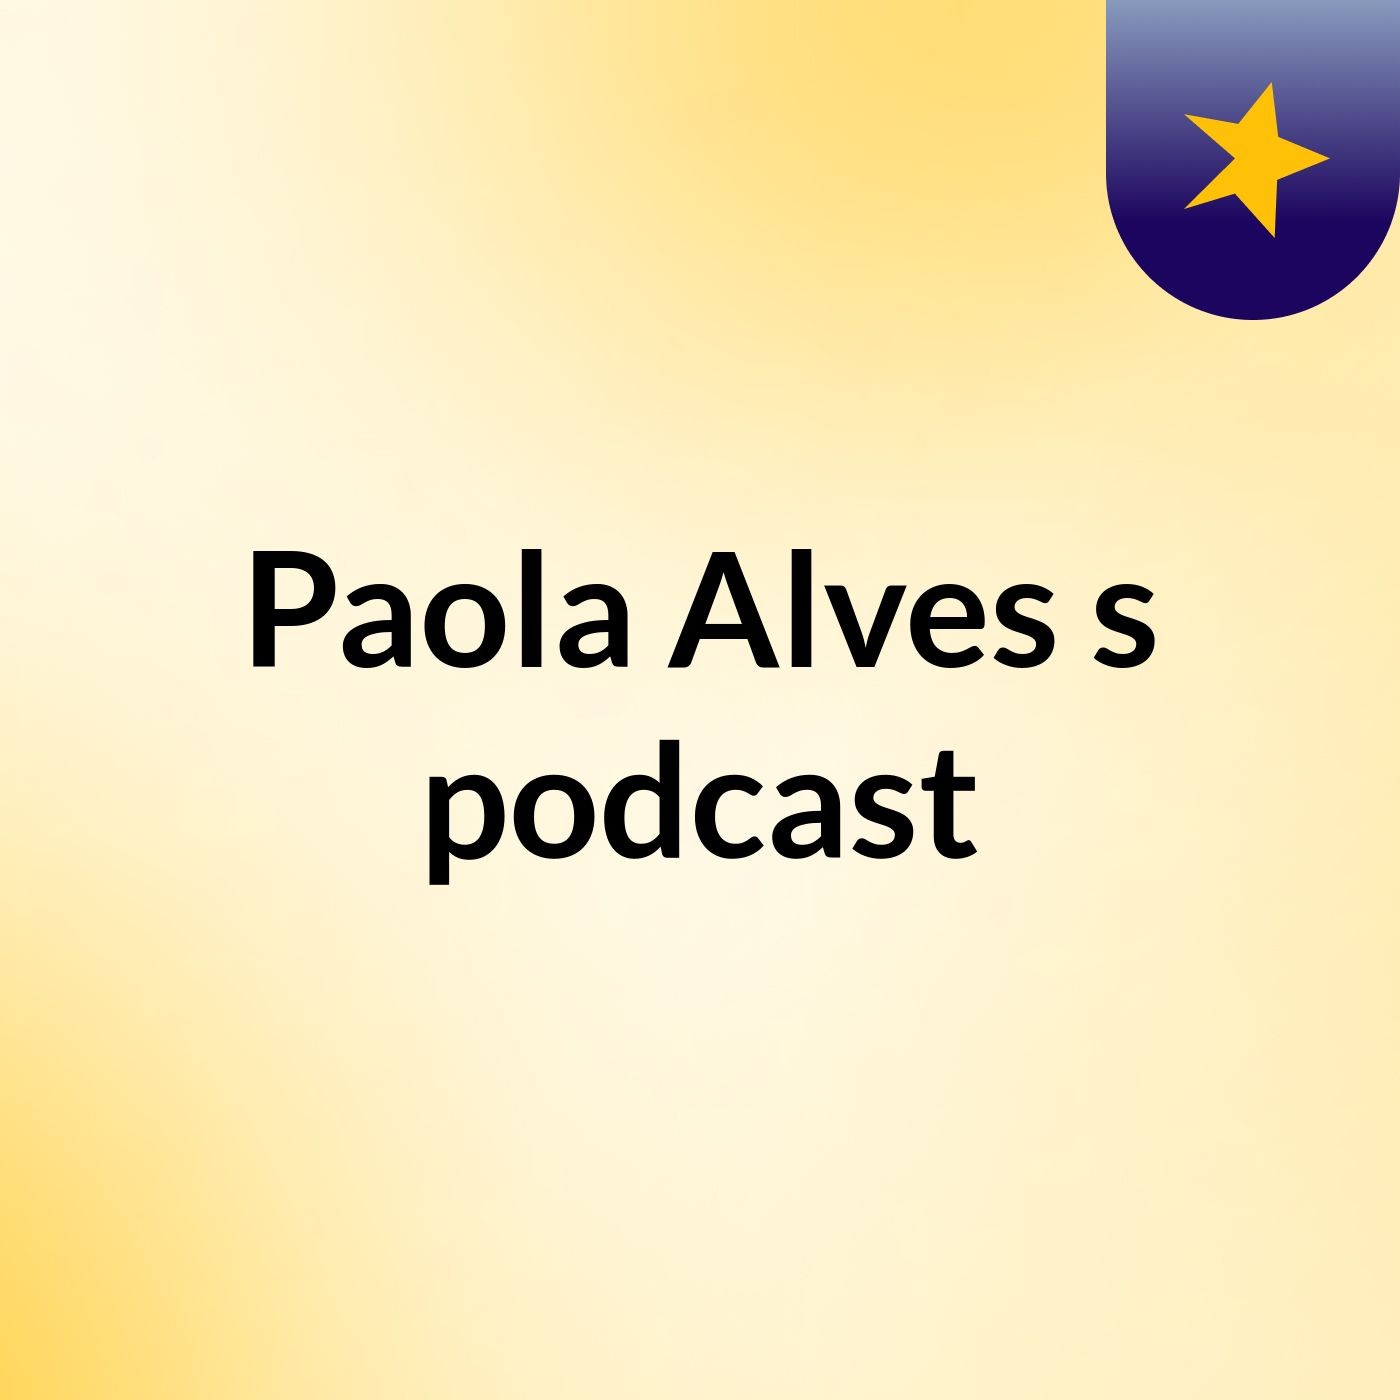 Paola Alves's podcast